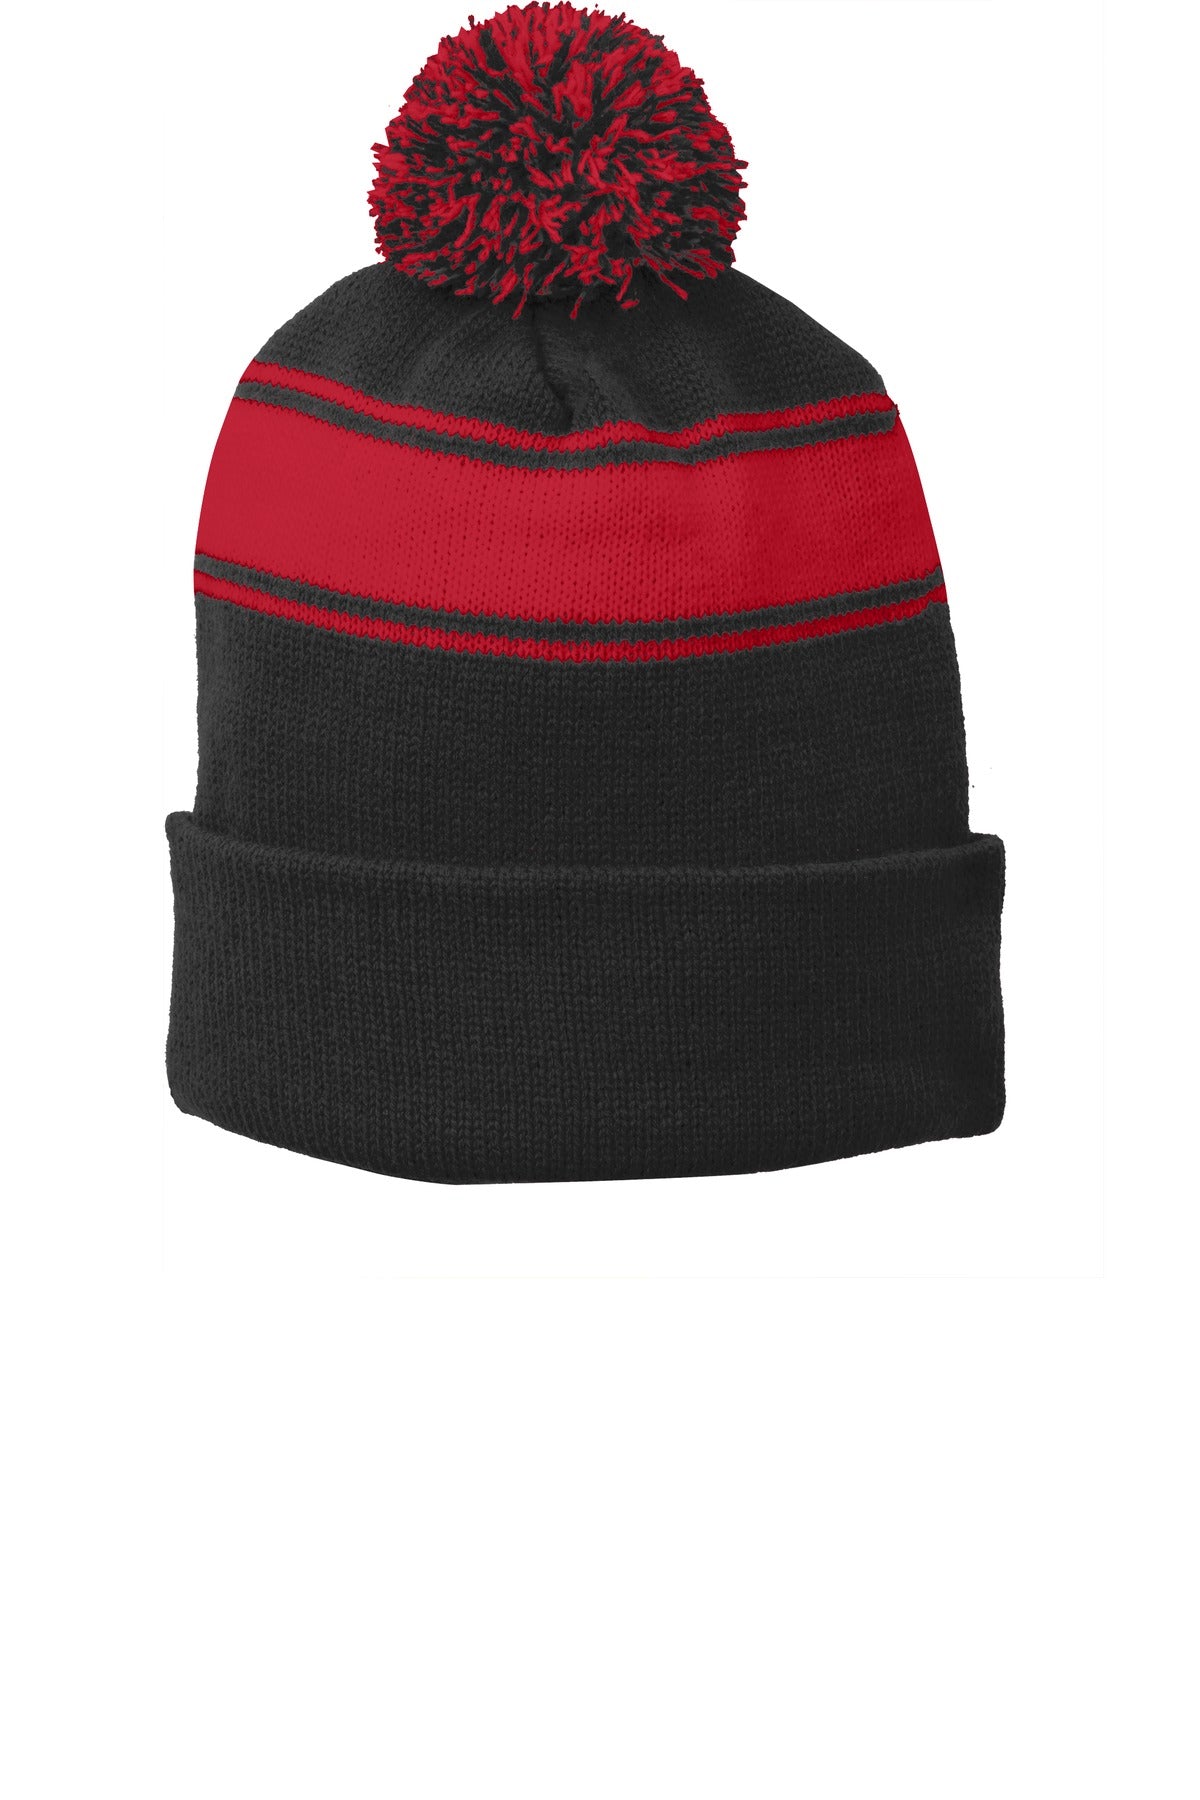 Caps Black/ True Red OSFA Sport-Tek